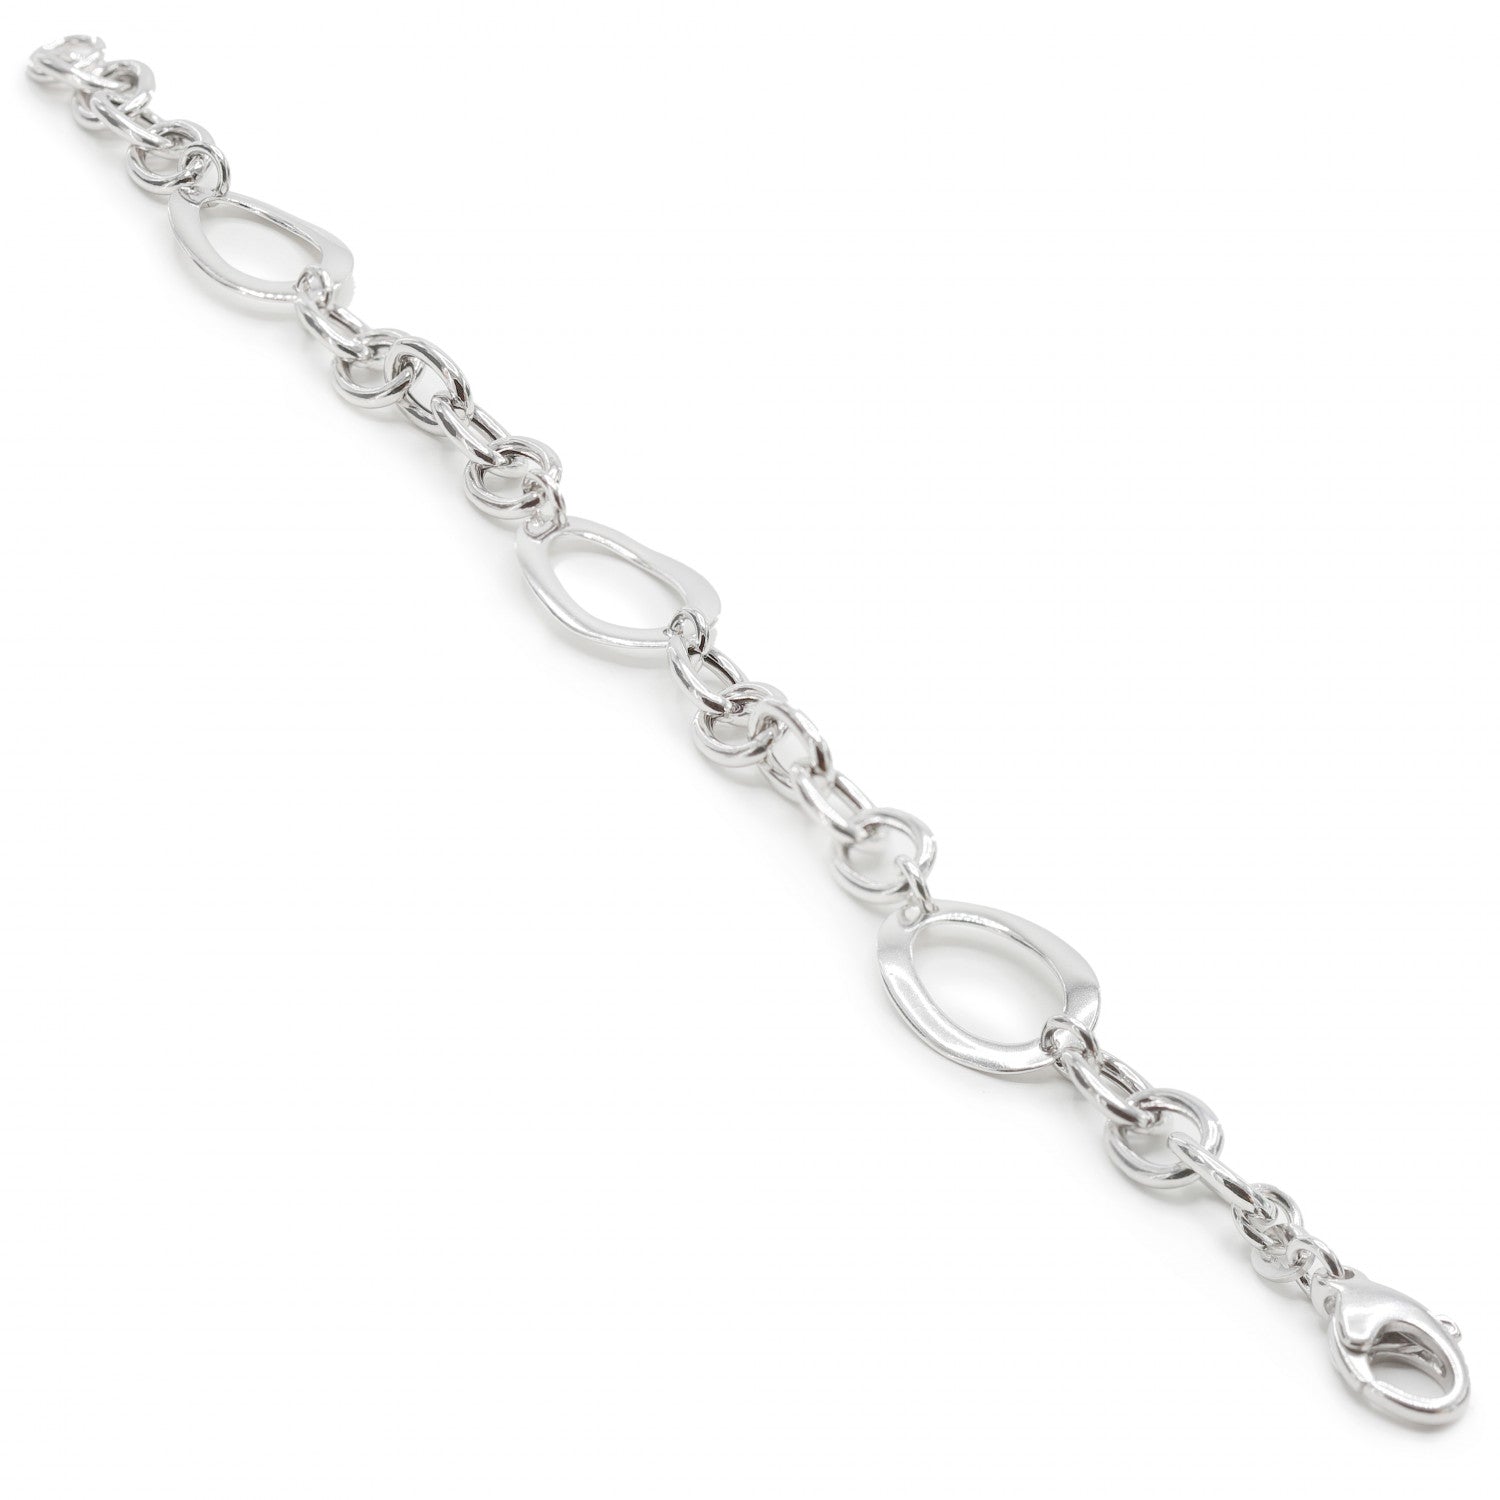 Silver link bracelets with triple oval motif design